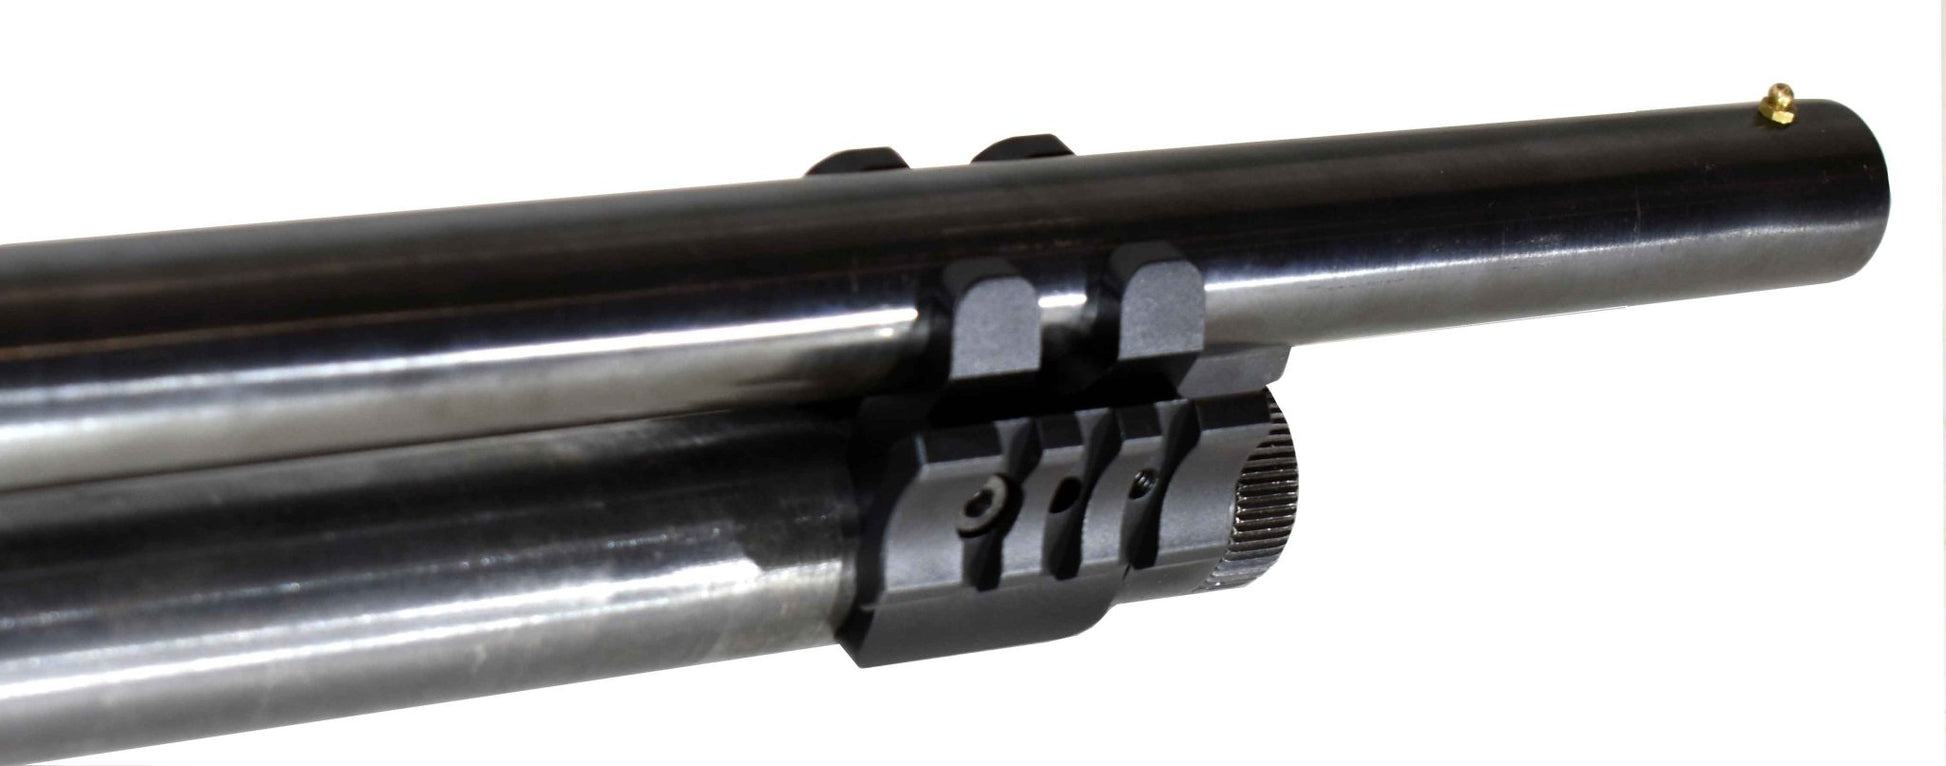 Black aces pro x combo 12 gauge pump aluminum mount with 2 side picatinny rails. - TRINITY SUPPLY INC